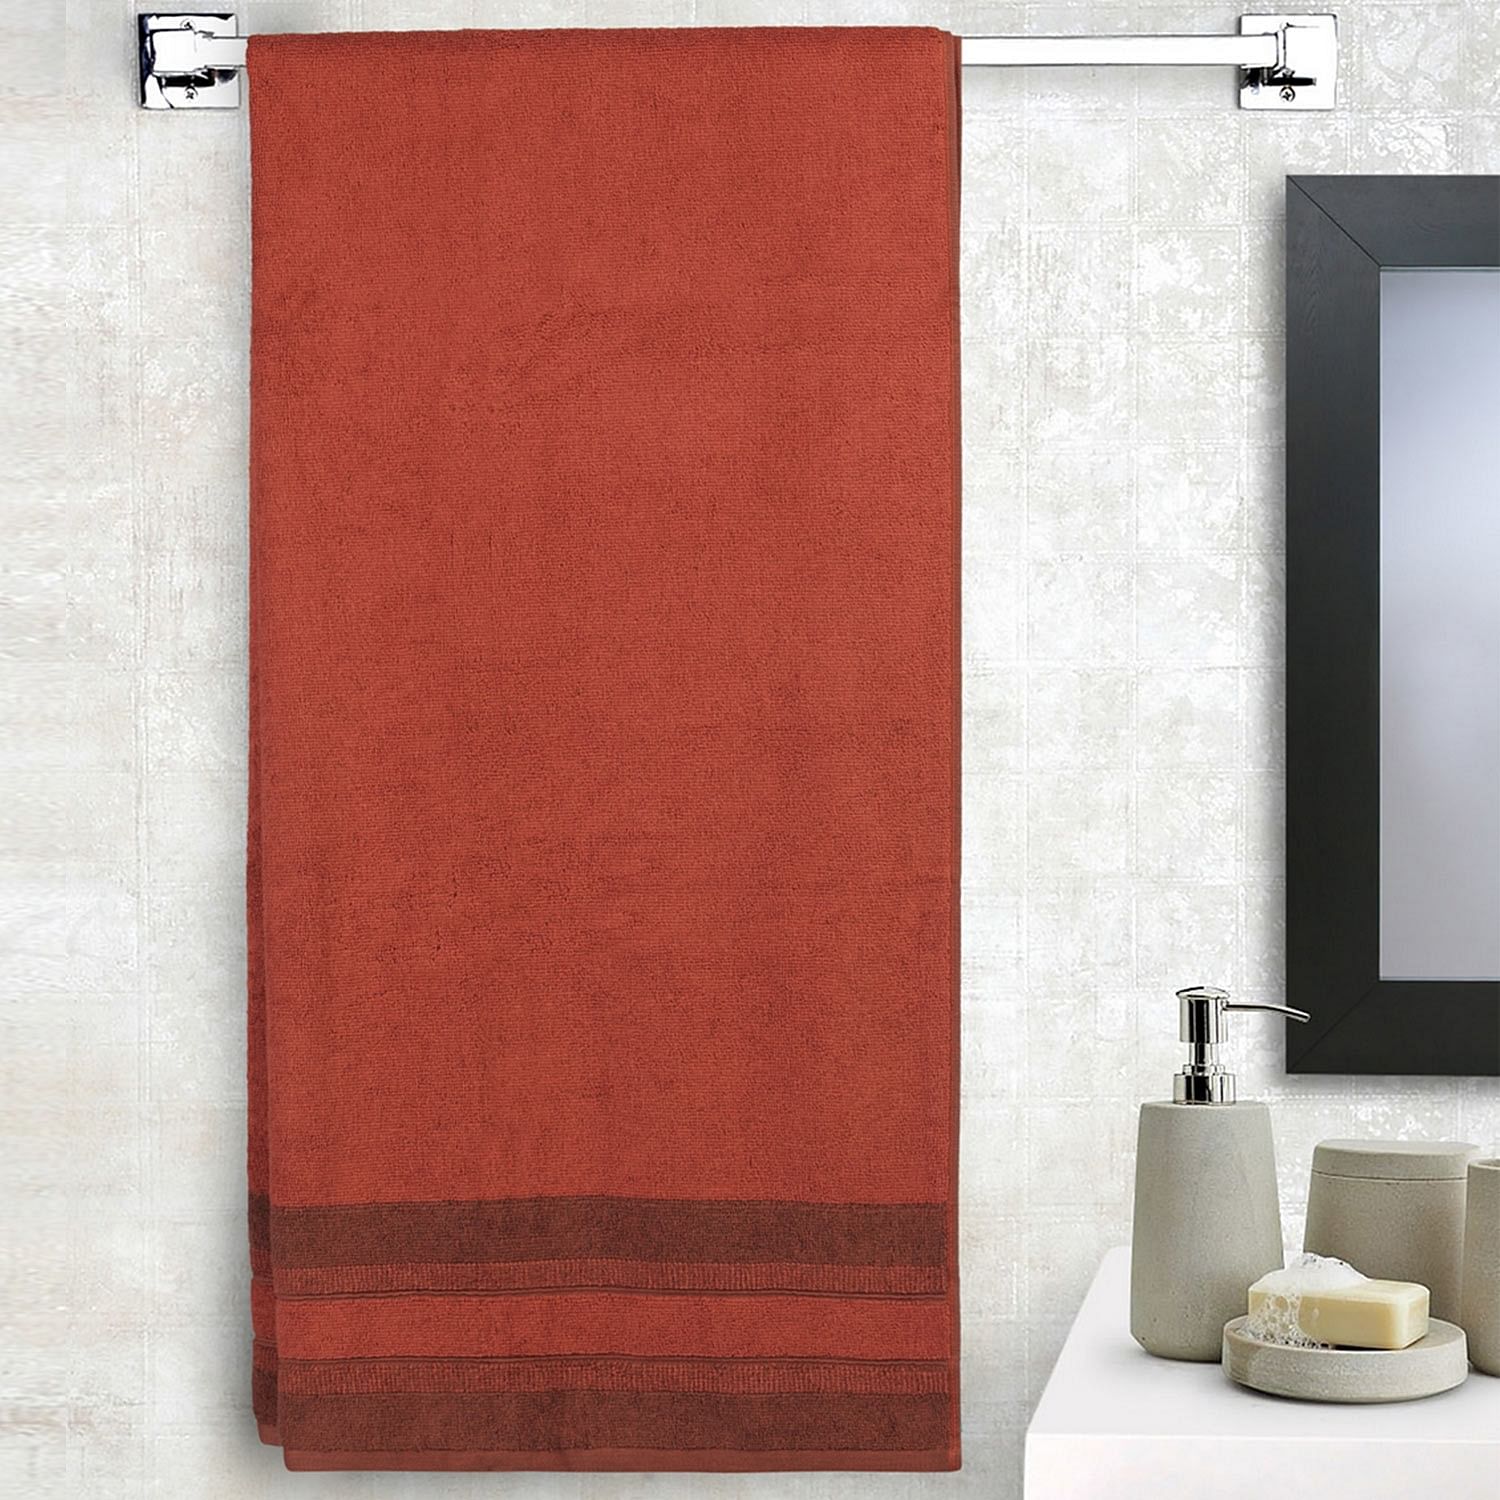 Charcoal Cotton Towel 76X150 Cms 550 Gsm in Brick Colour